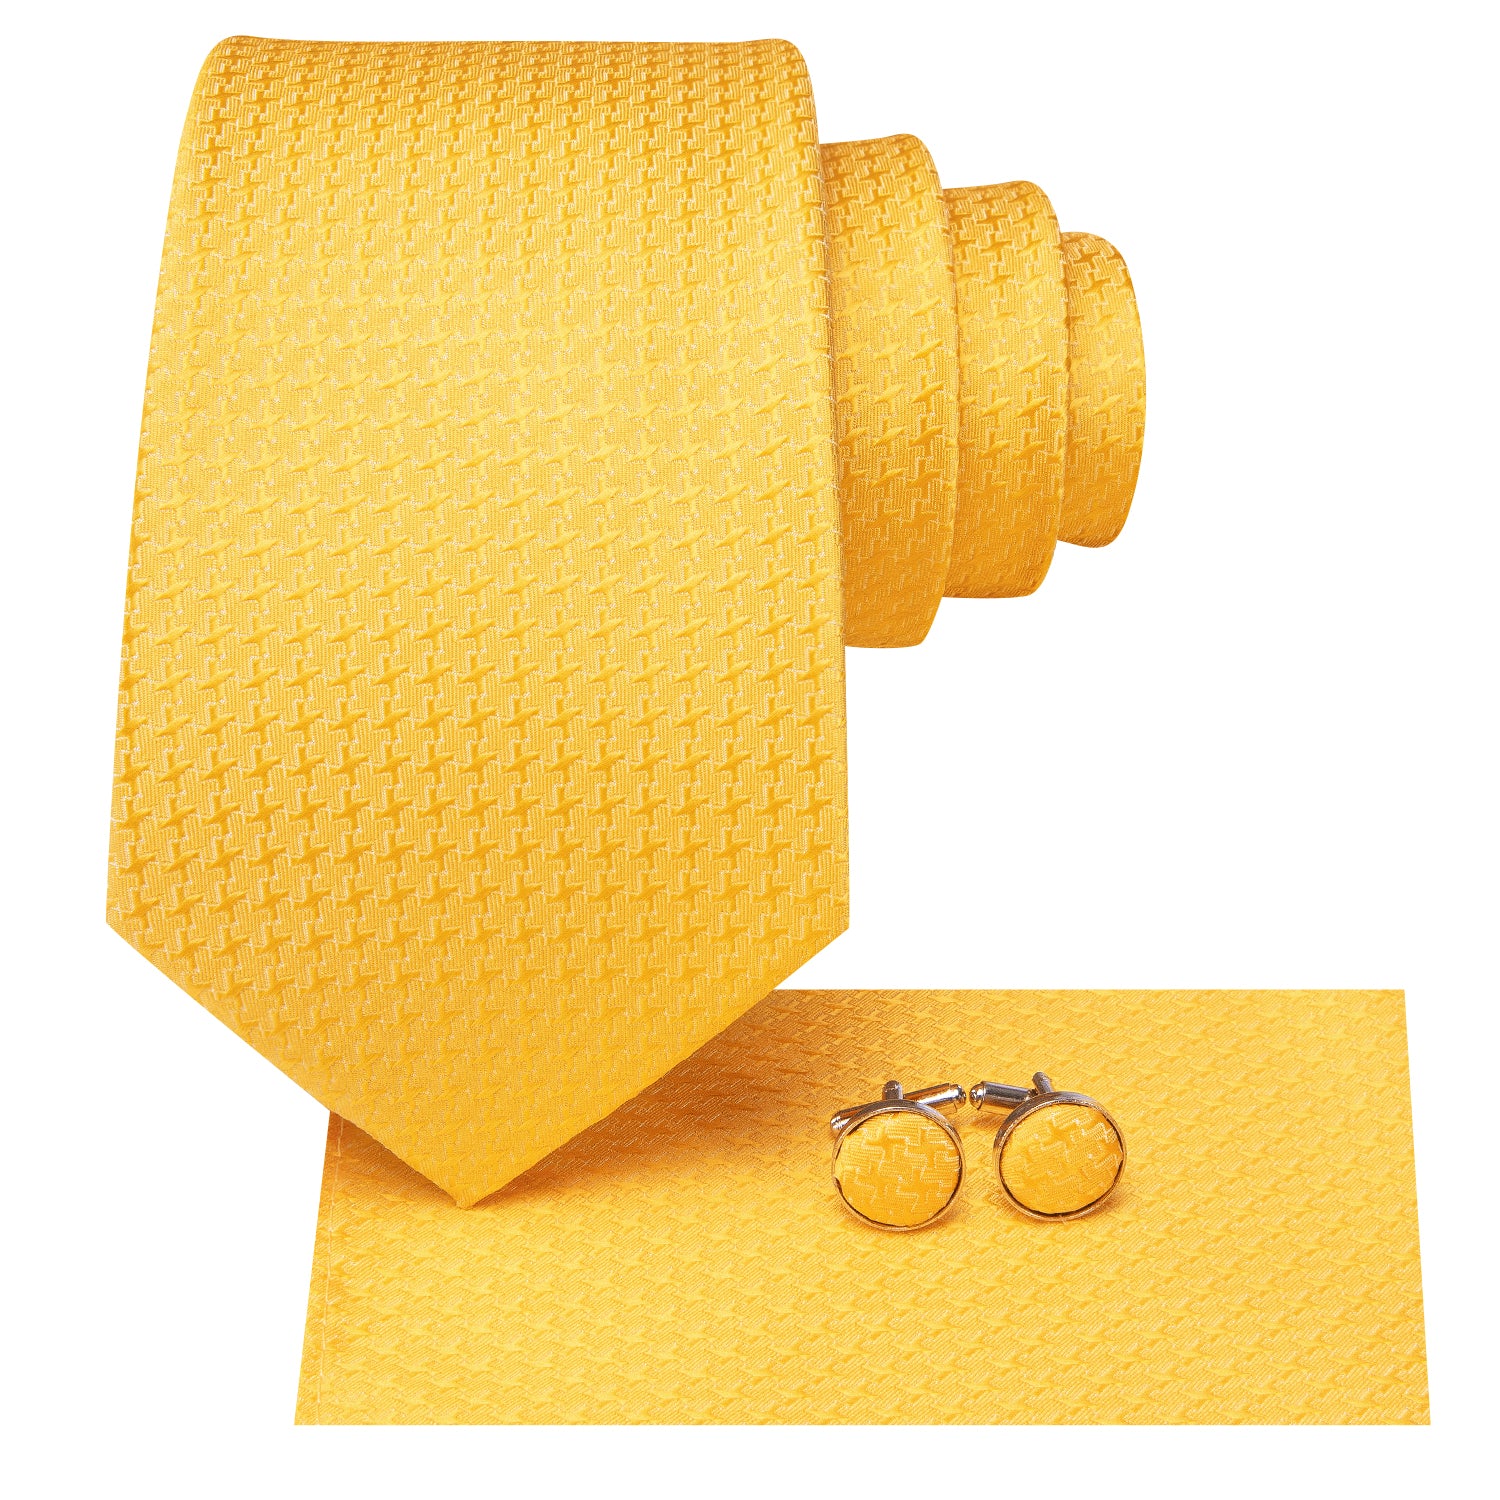 Hi-Tie Bright Yellow Novelty Men's Tie Pocket Square Cufflinks Set